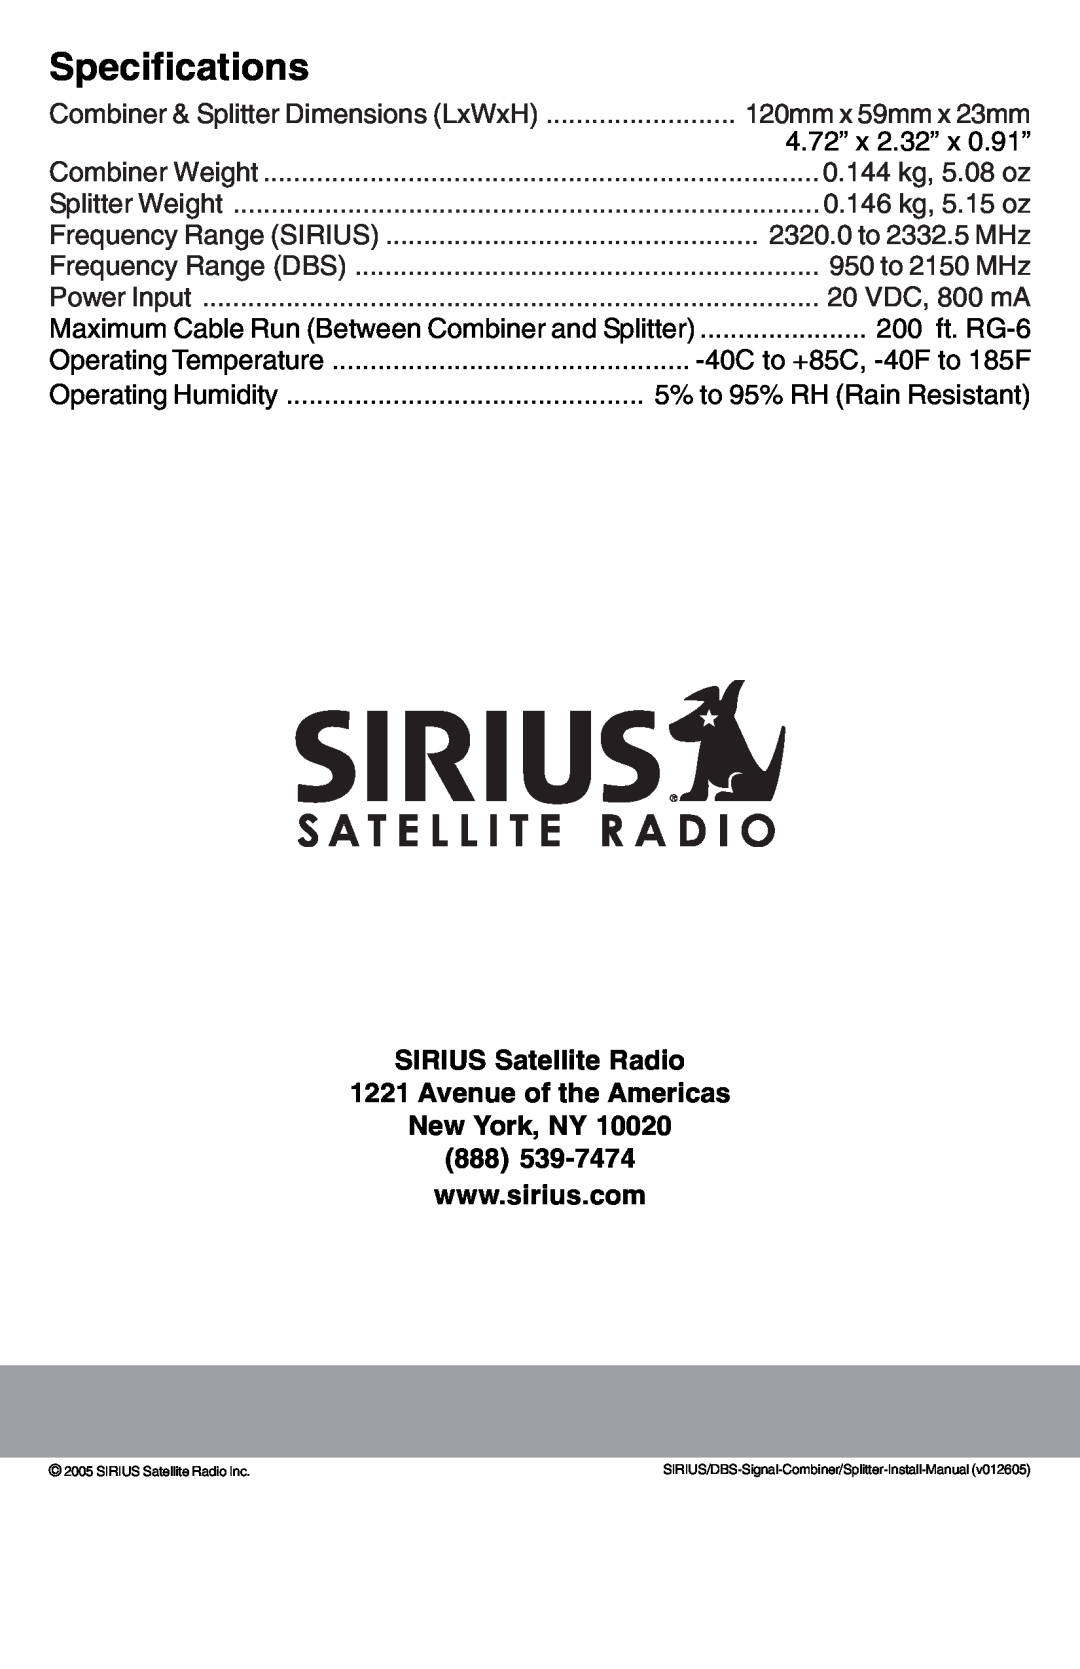 Sirius Satellite Radio SR-100C manual Specifications, SIRIUS Satellite Radio, Avenue of the Americas New York, NY 